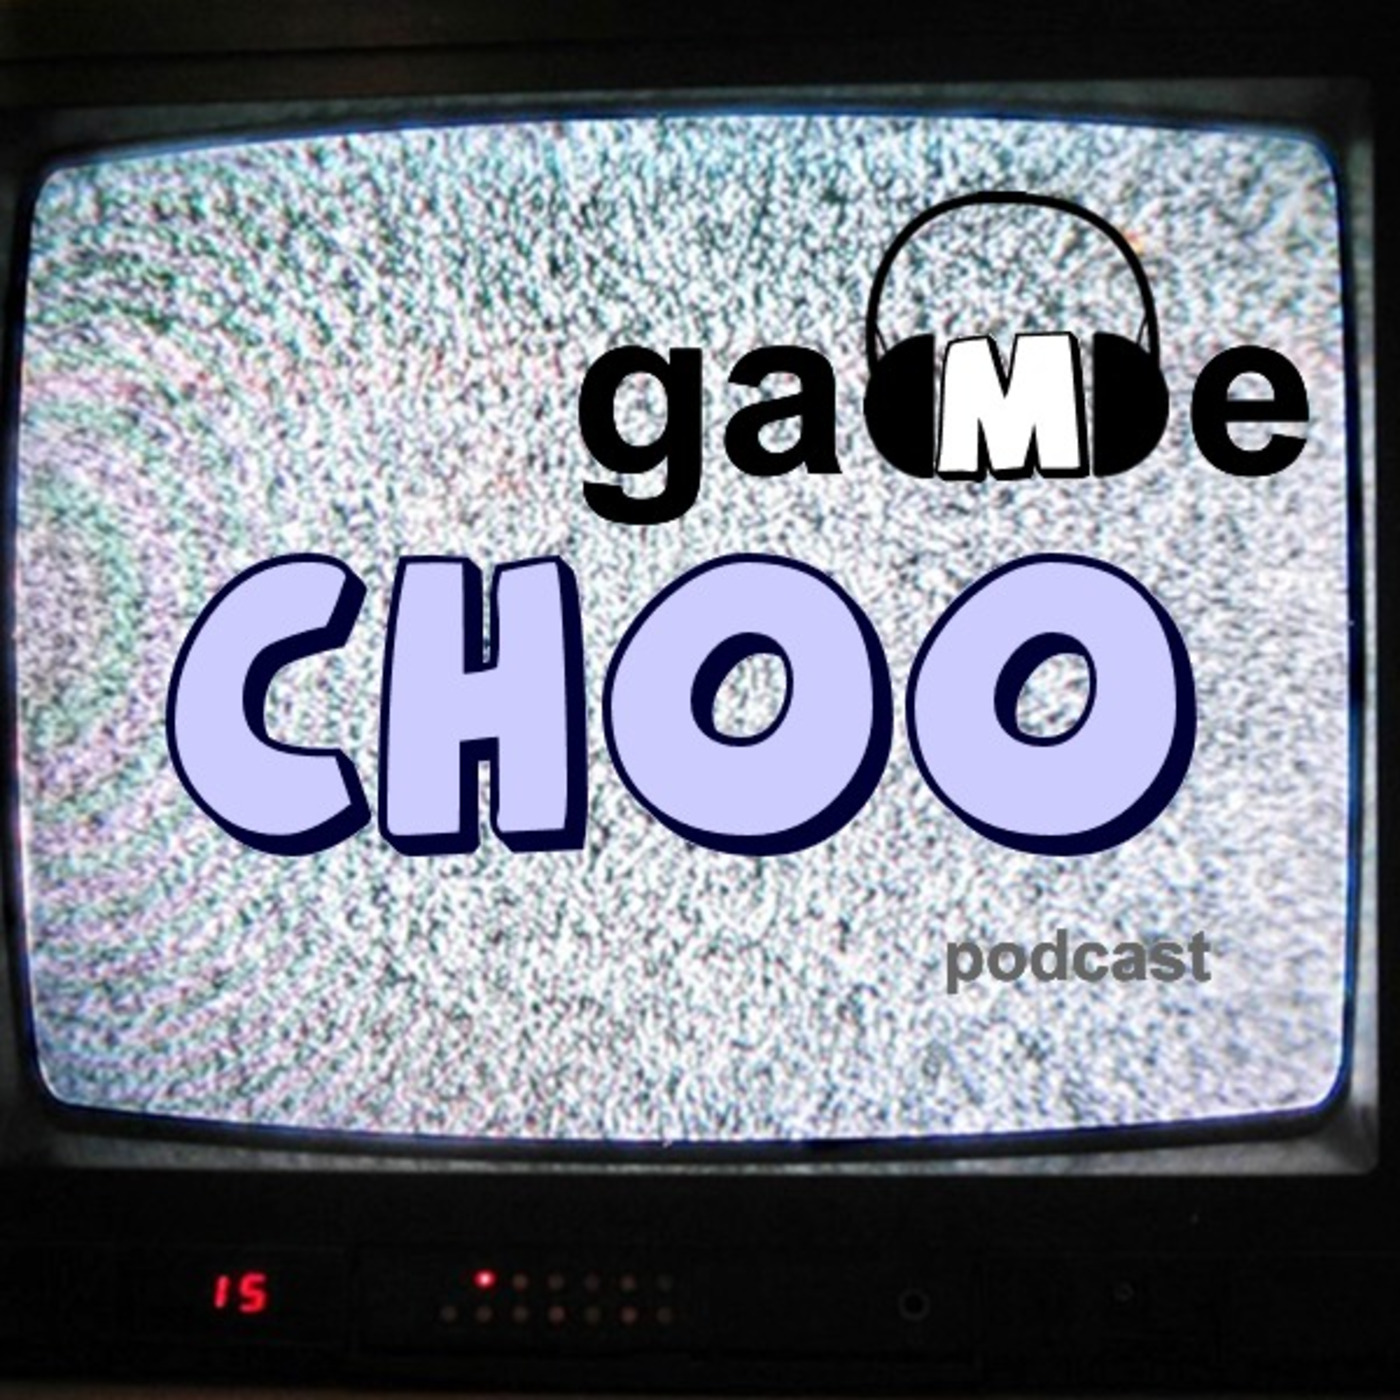 GameChoo Podcast